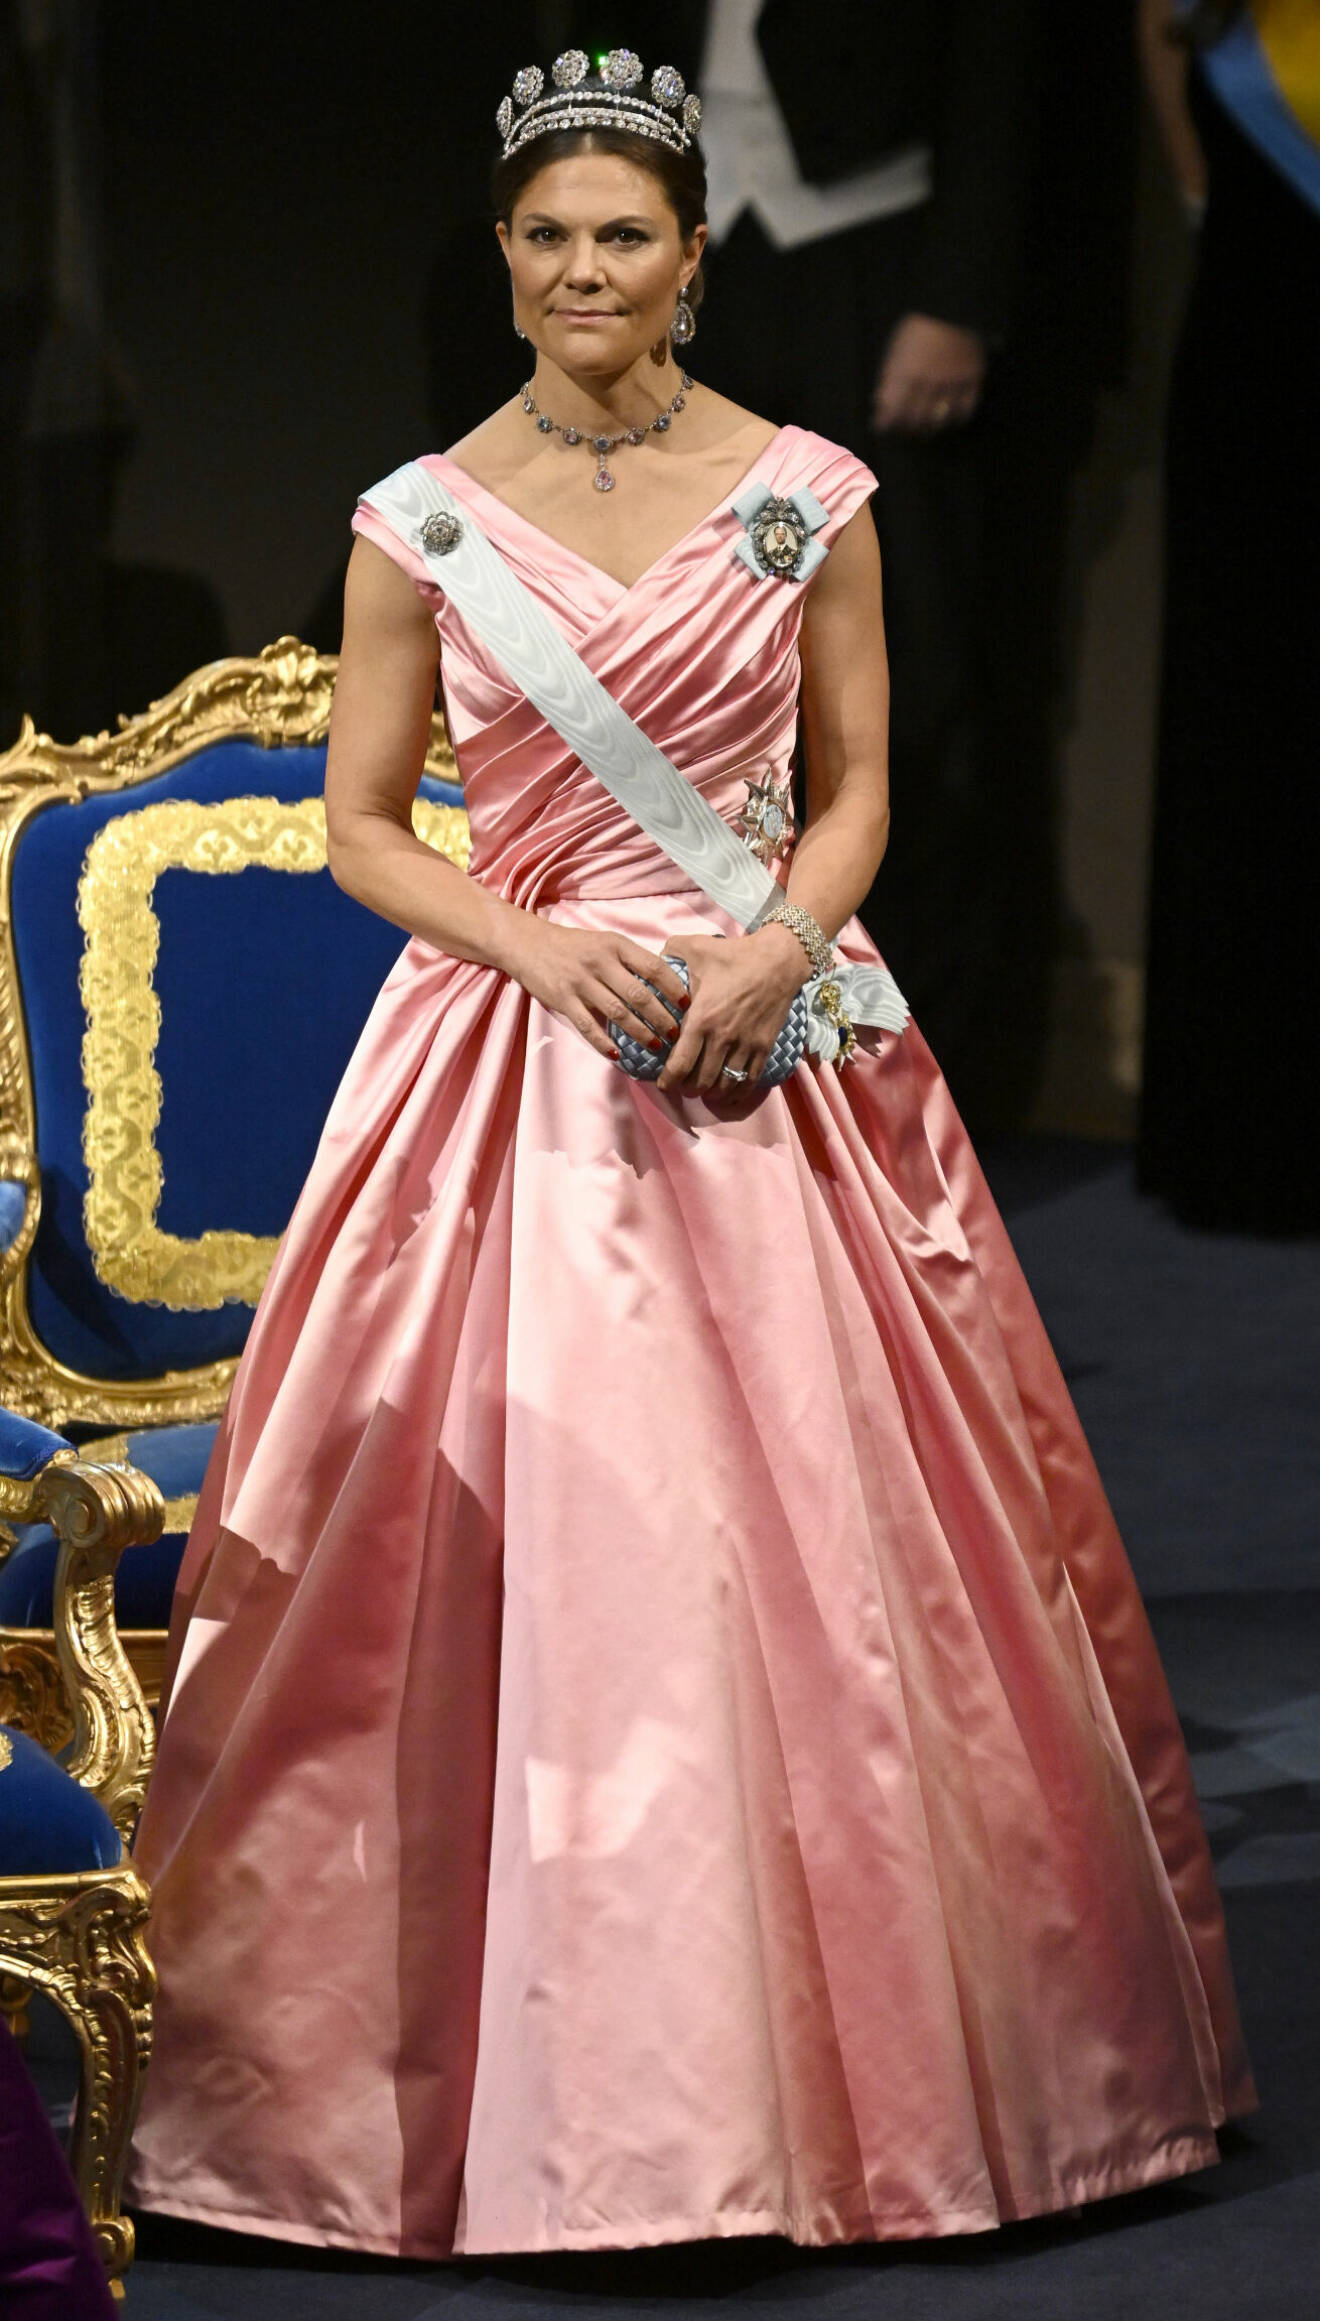 Kronprinsessan Victoria Nobel 2022